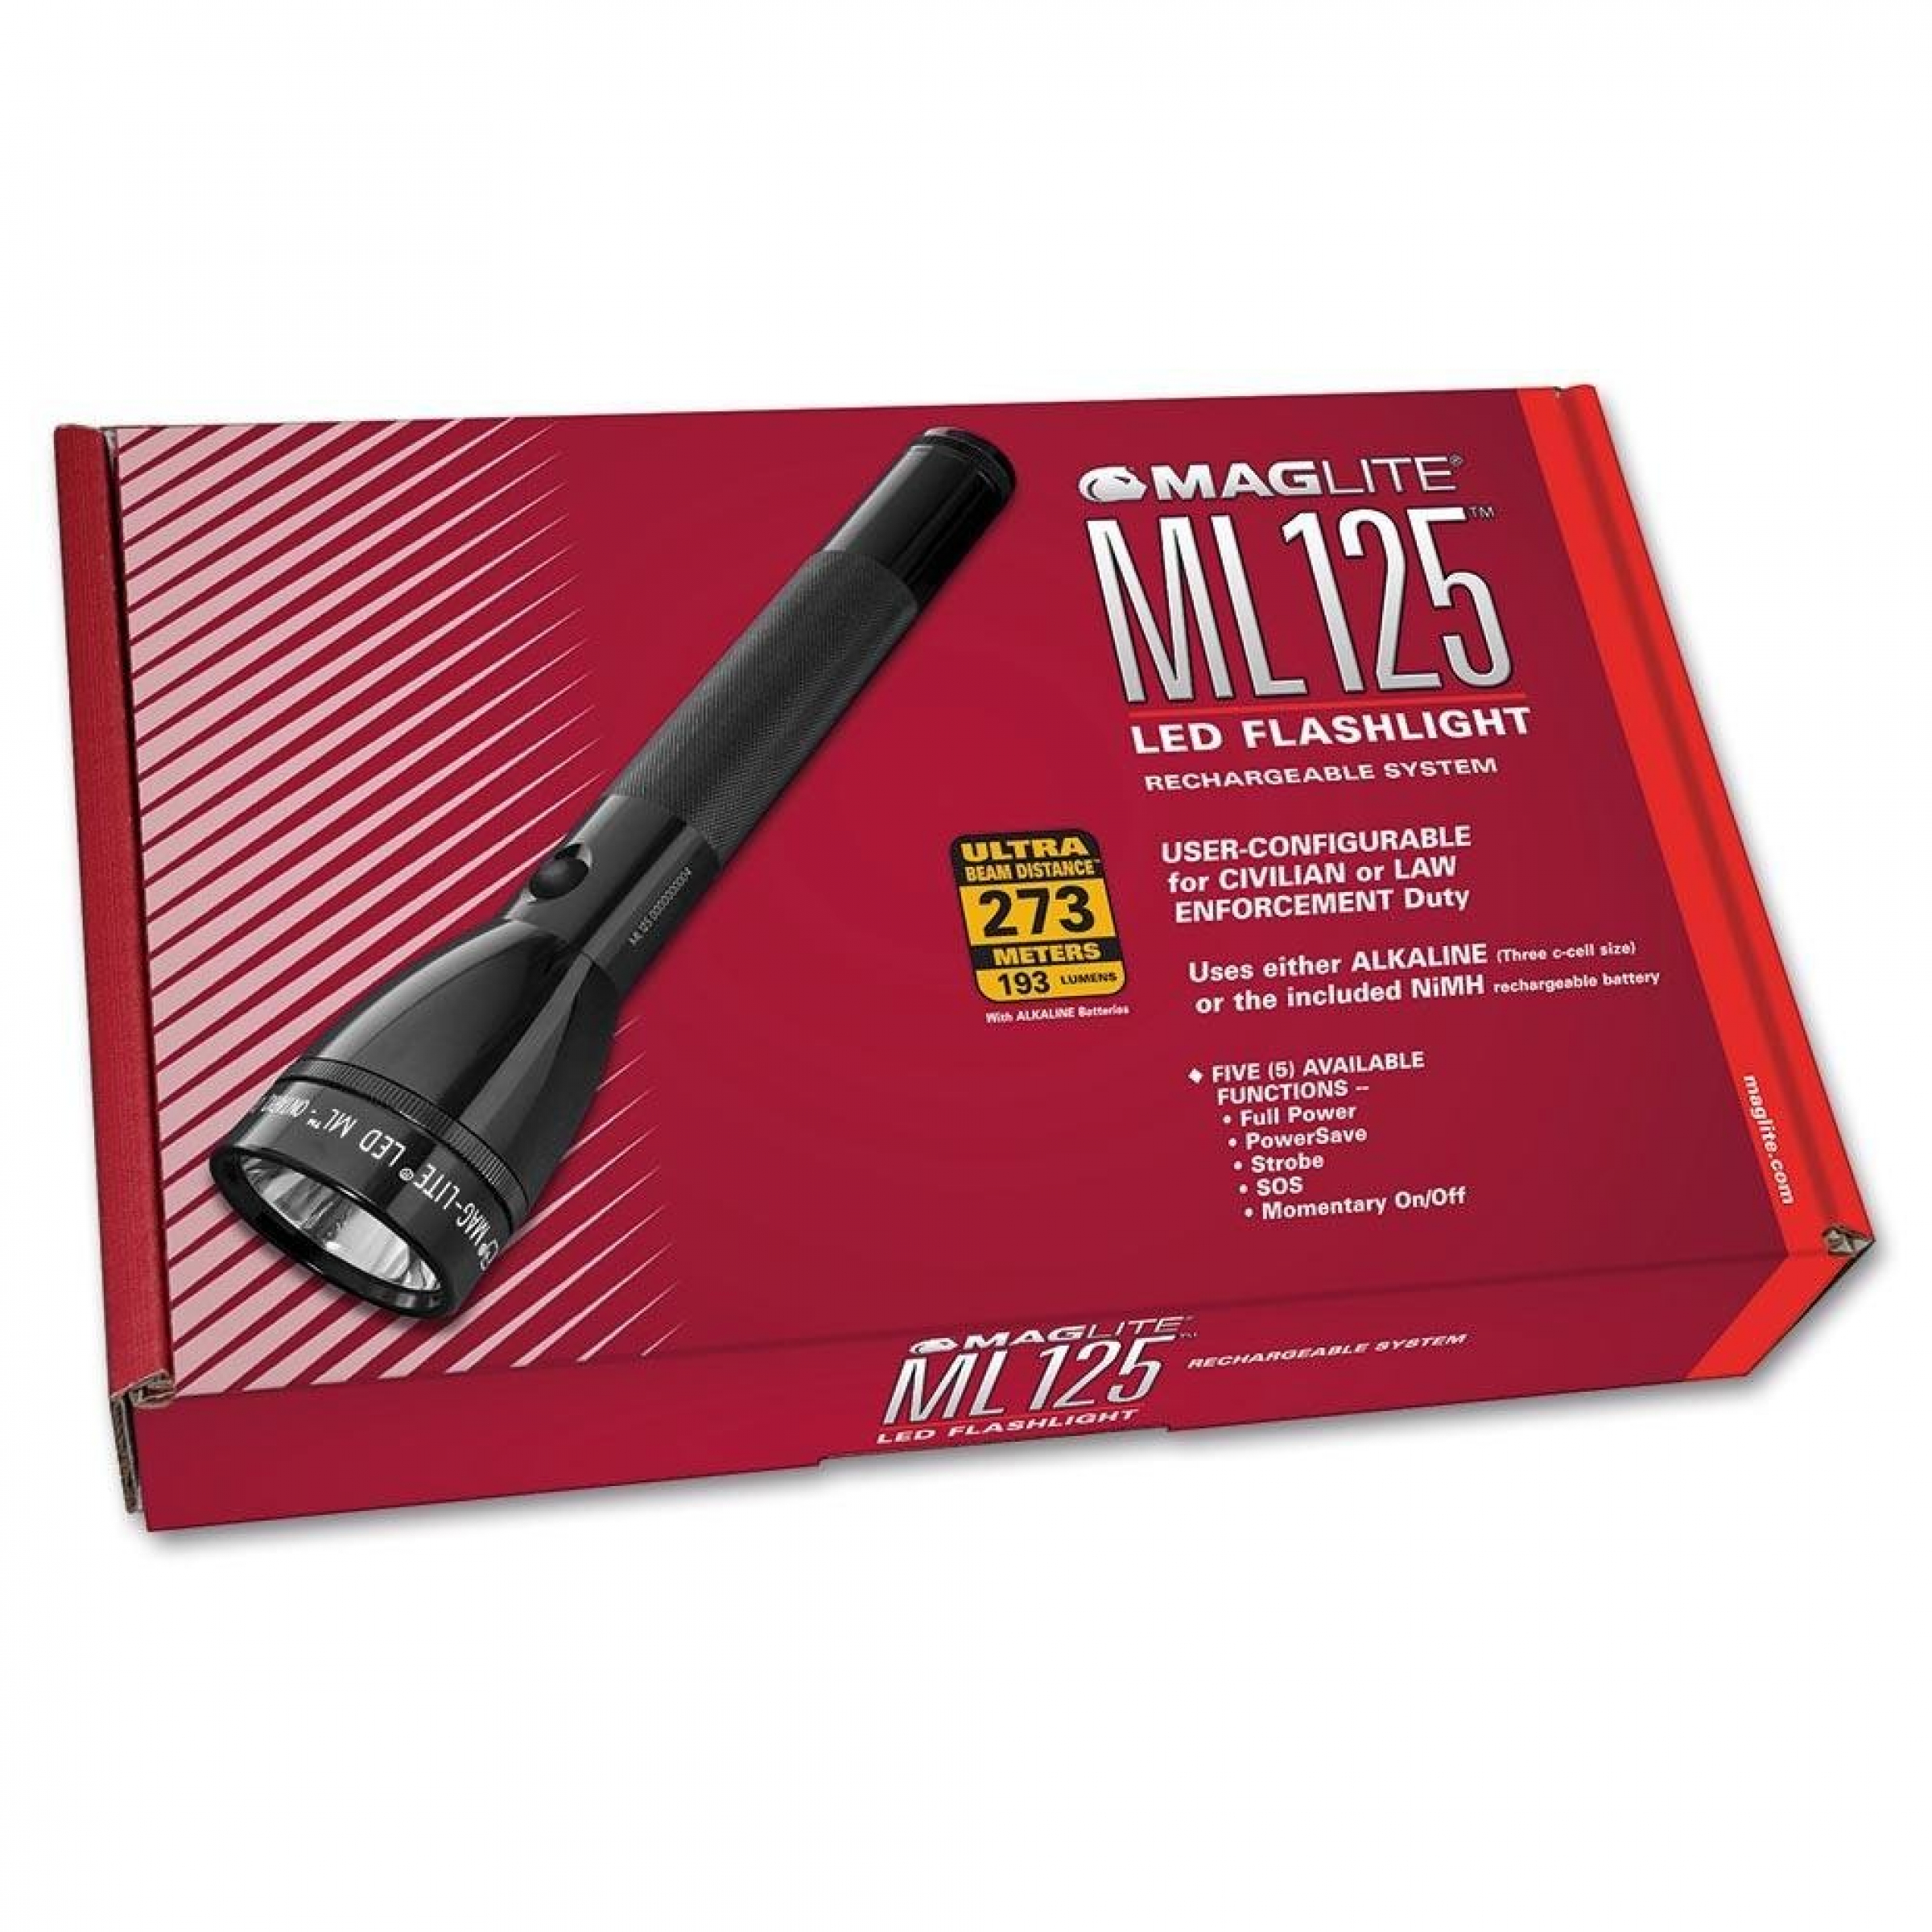 Maglite ML125 LED Rechargeable black - 1er Box